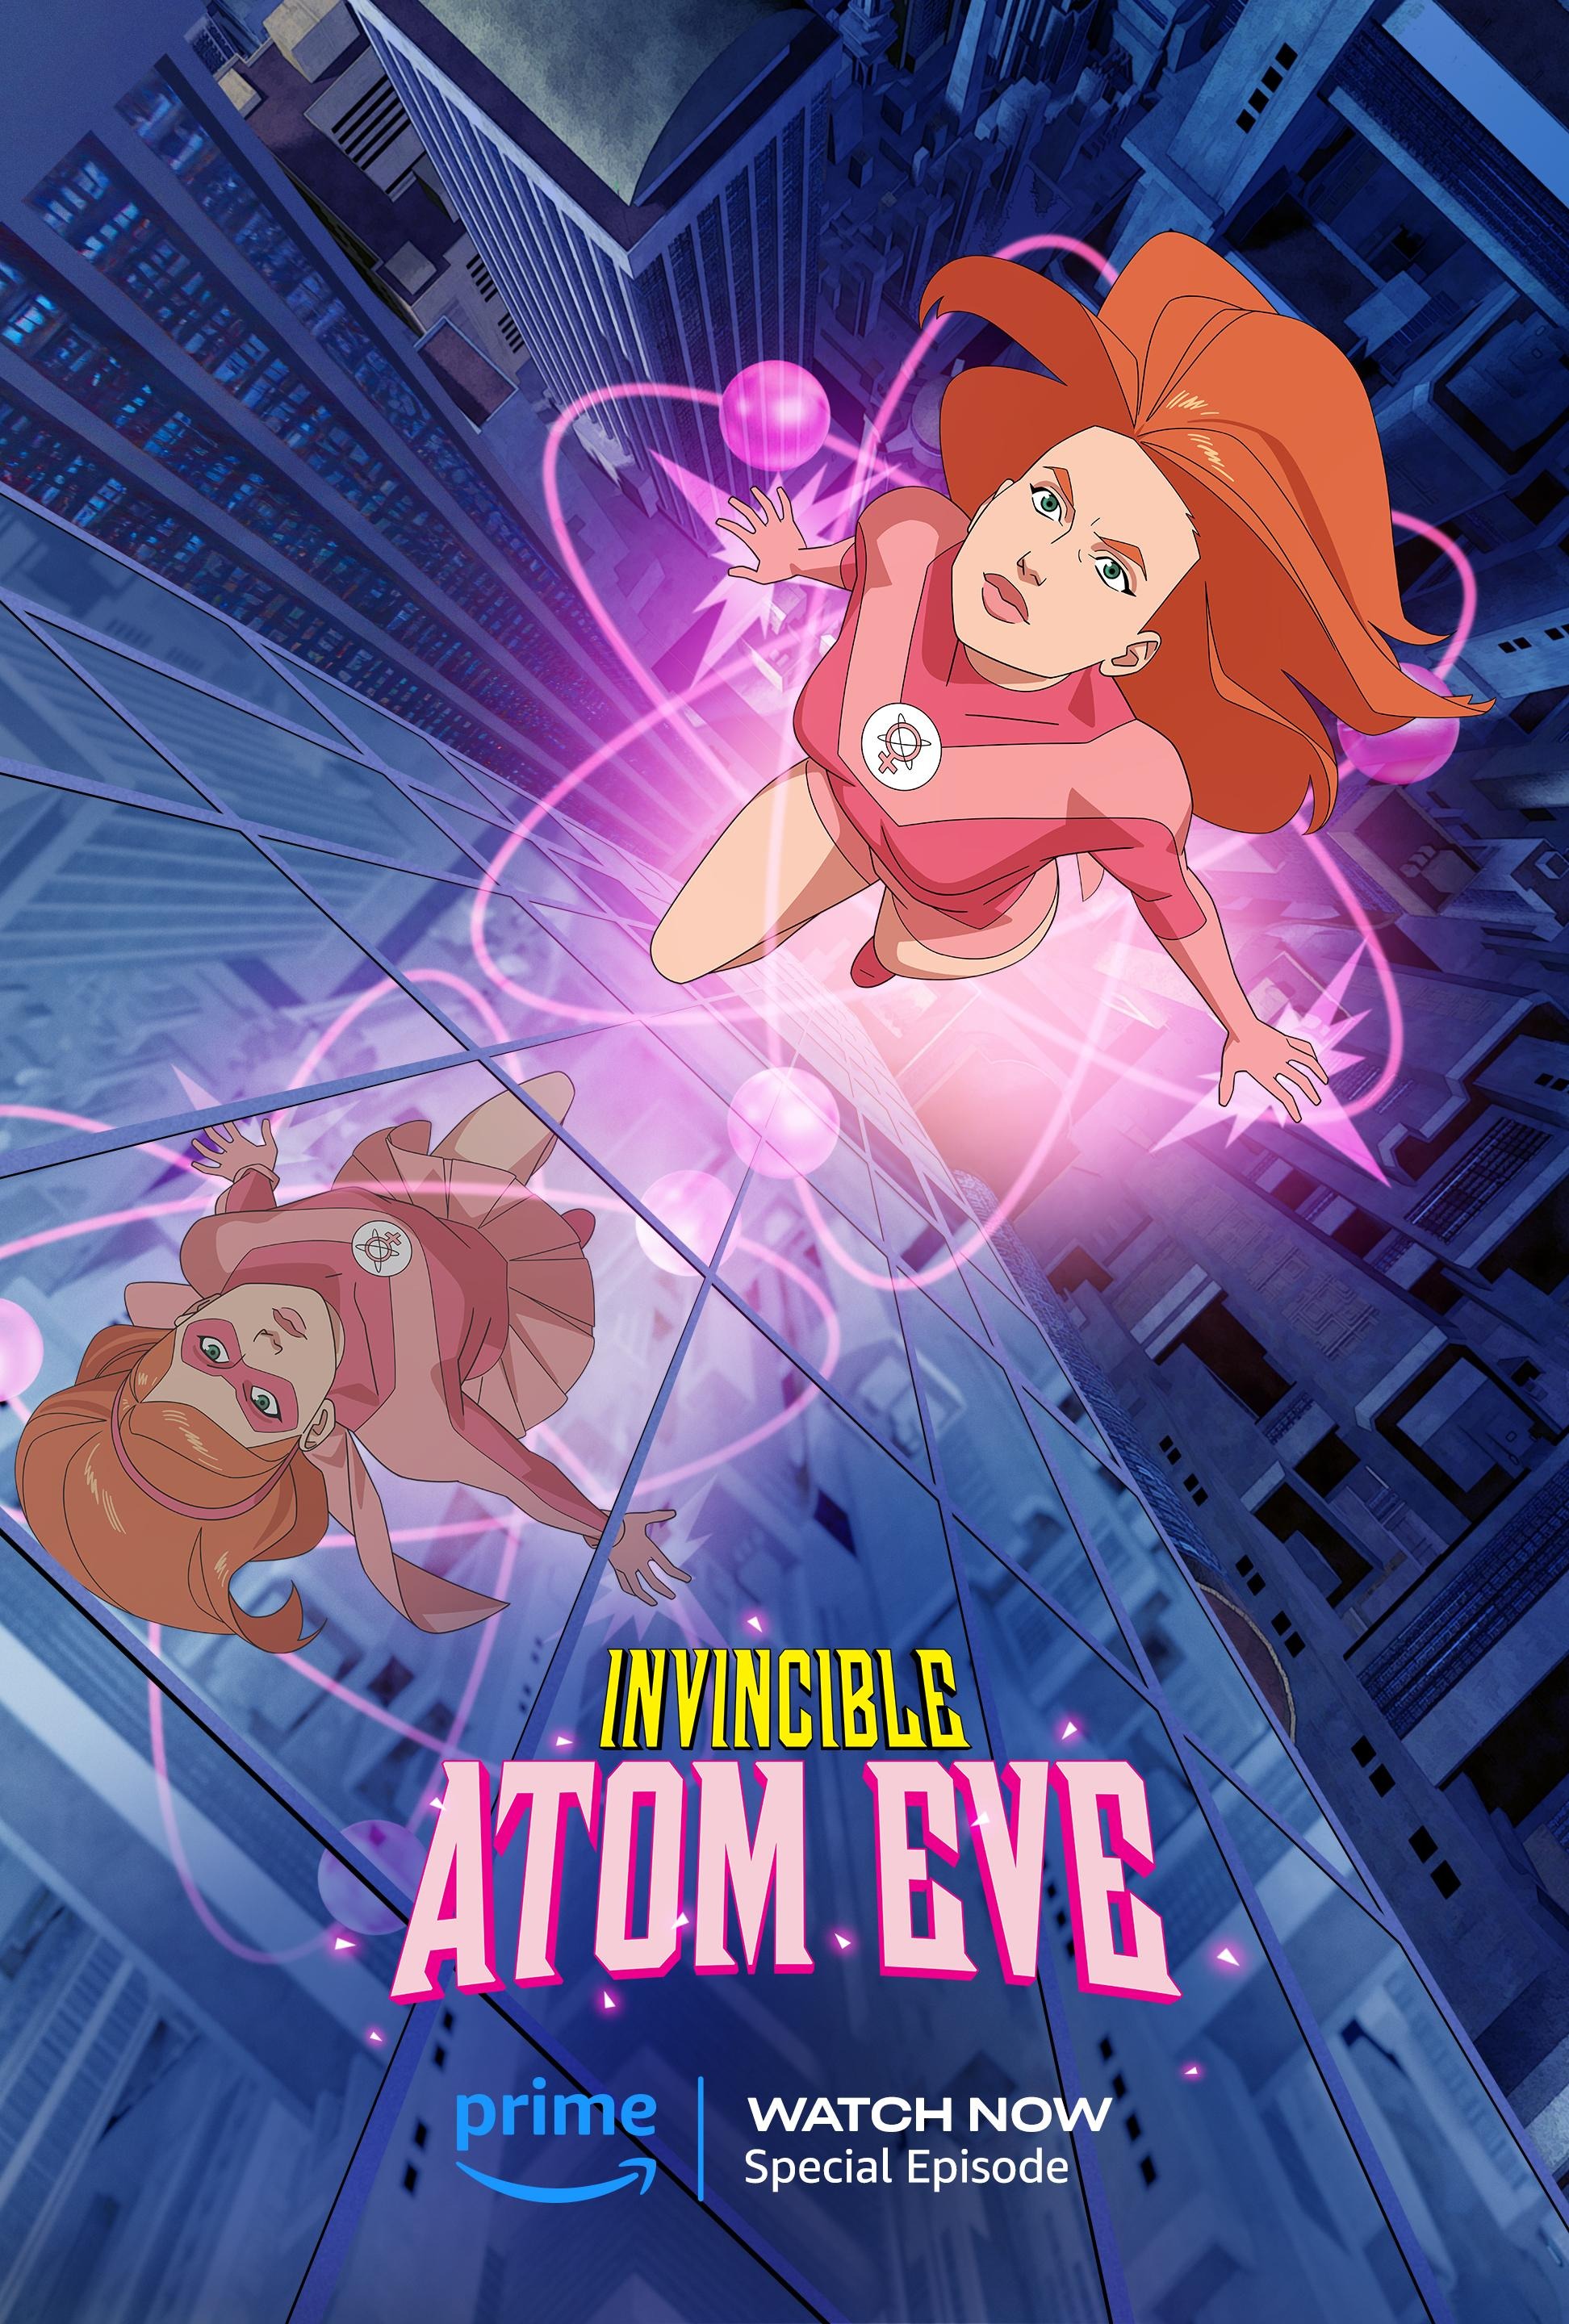 Mega Sized TV Poster Image for Invincible: Atom Eve 